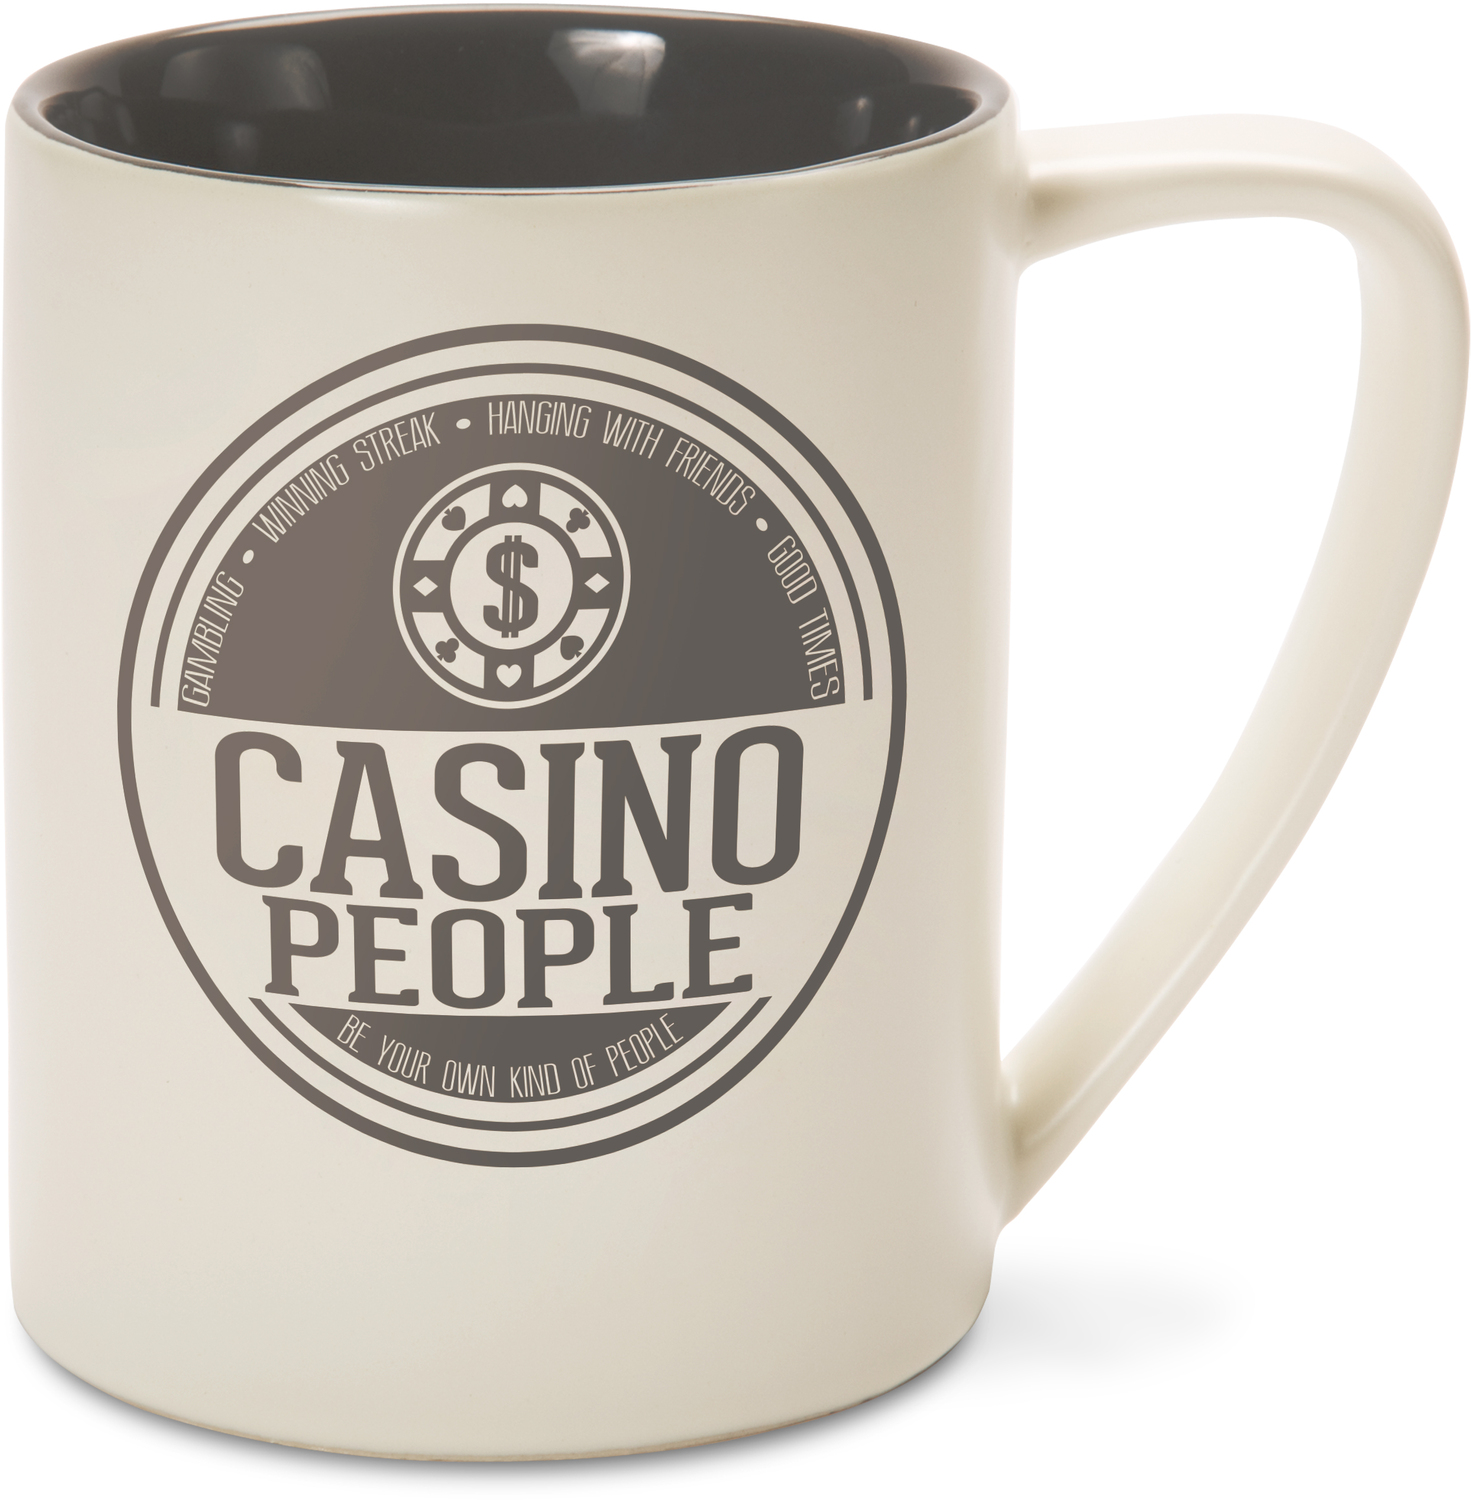 Casino People by We People - Casino People - 18 oz Mug